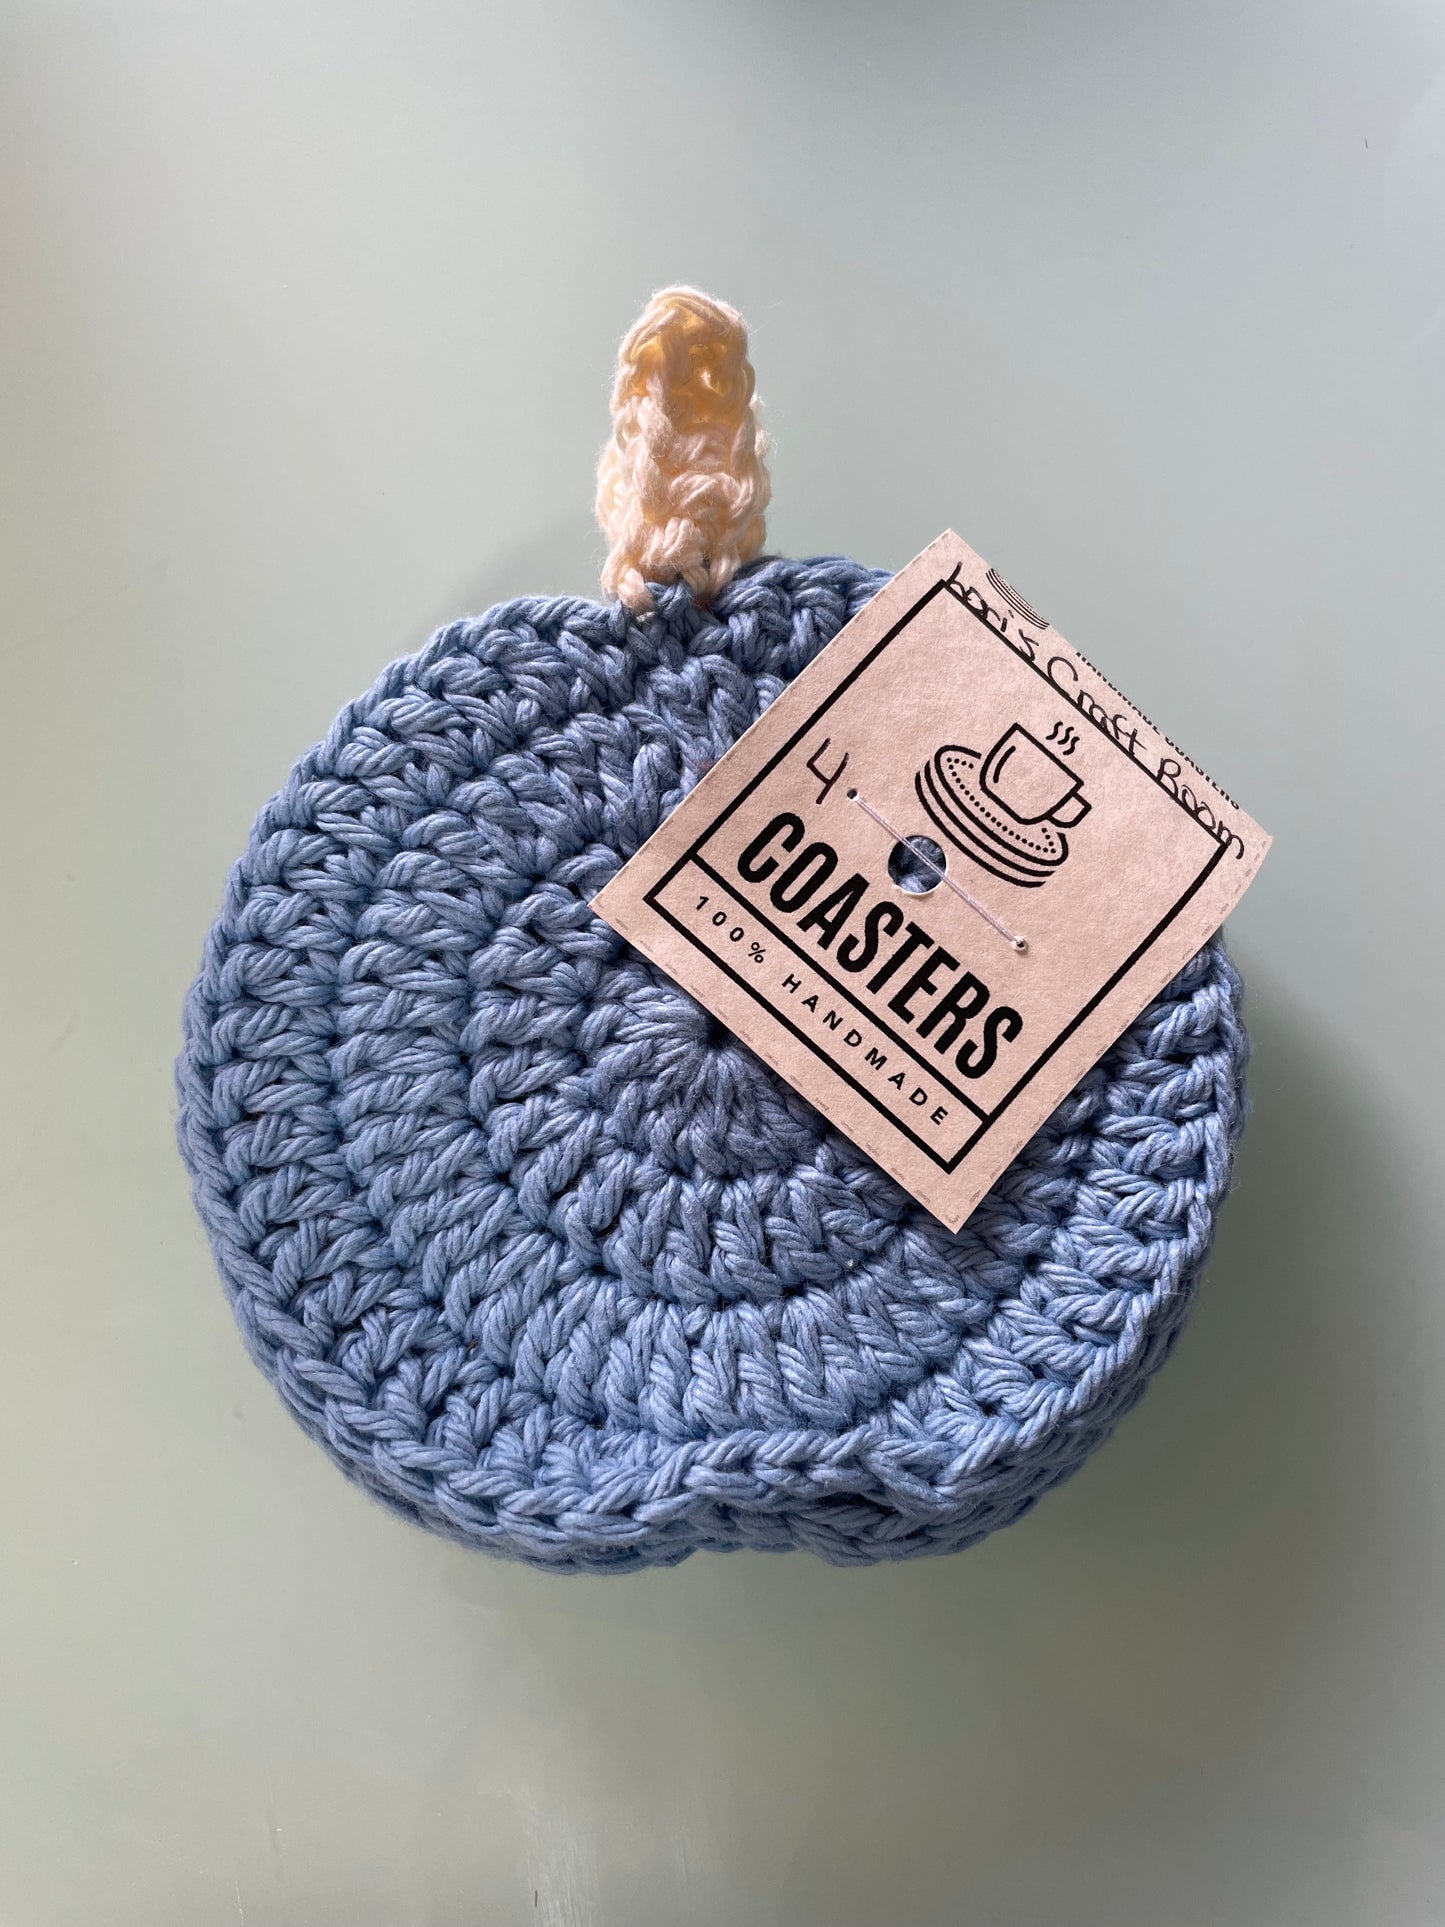 Crochet Pumpkin Coasters